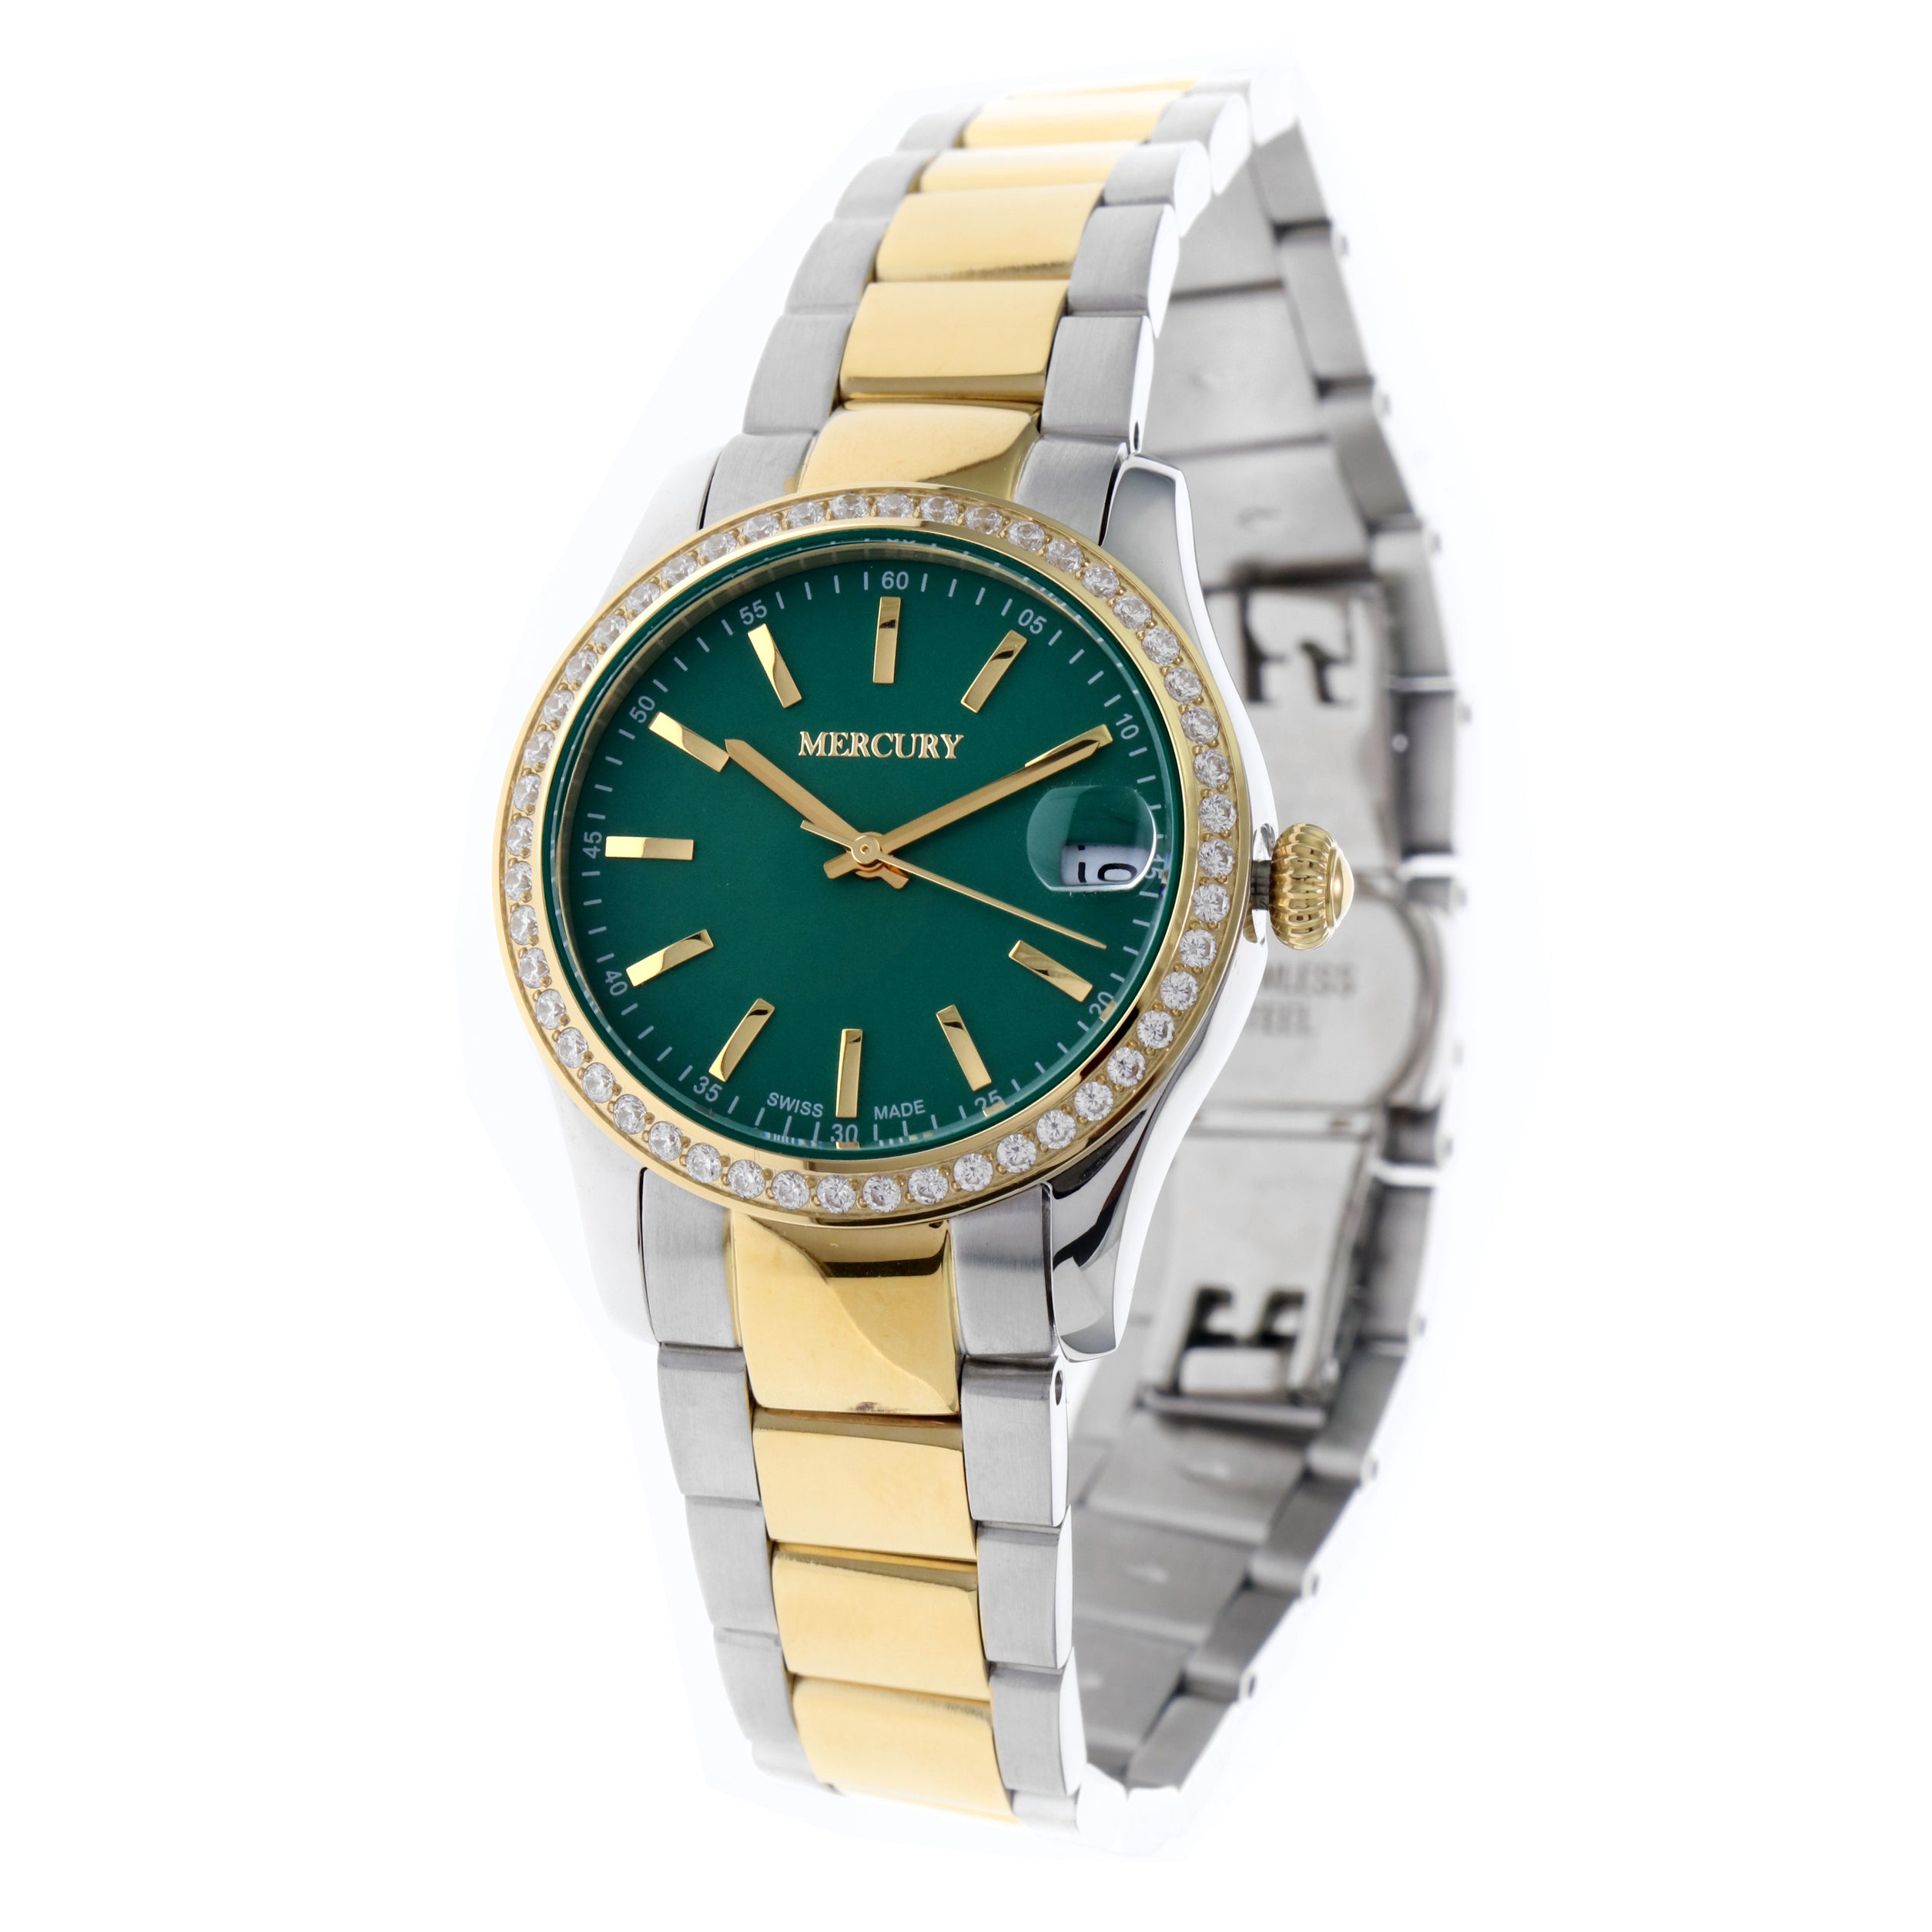 Mercury Women's Swiss Quartz Watch with Green Dial - MER-0033